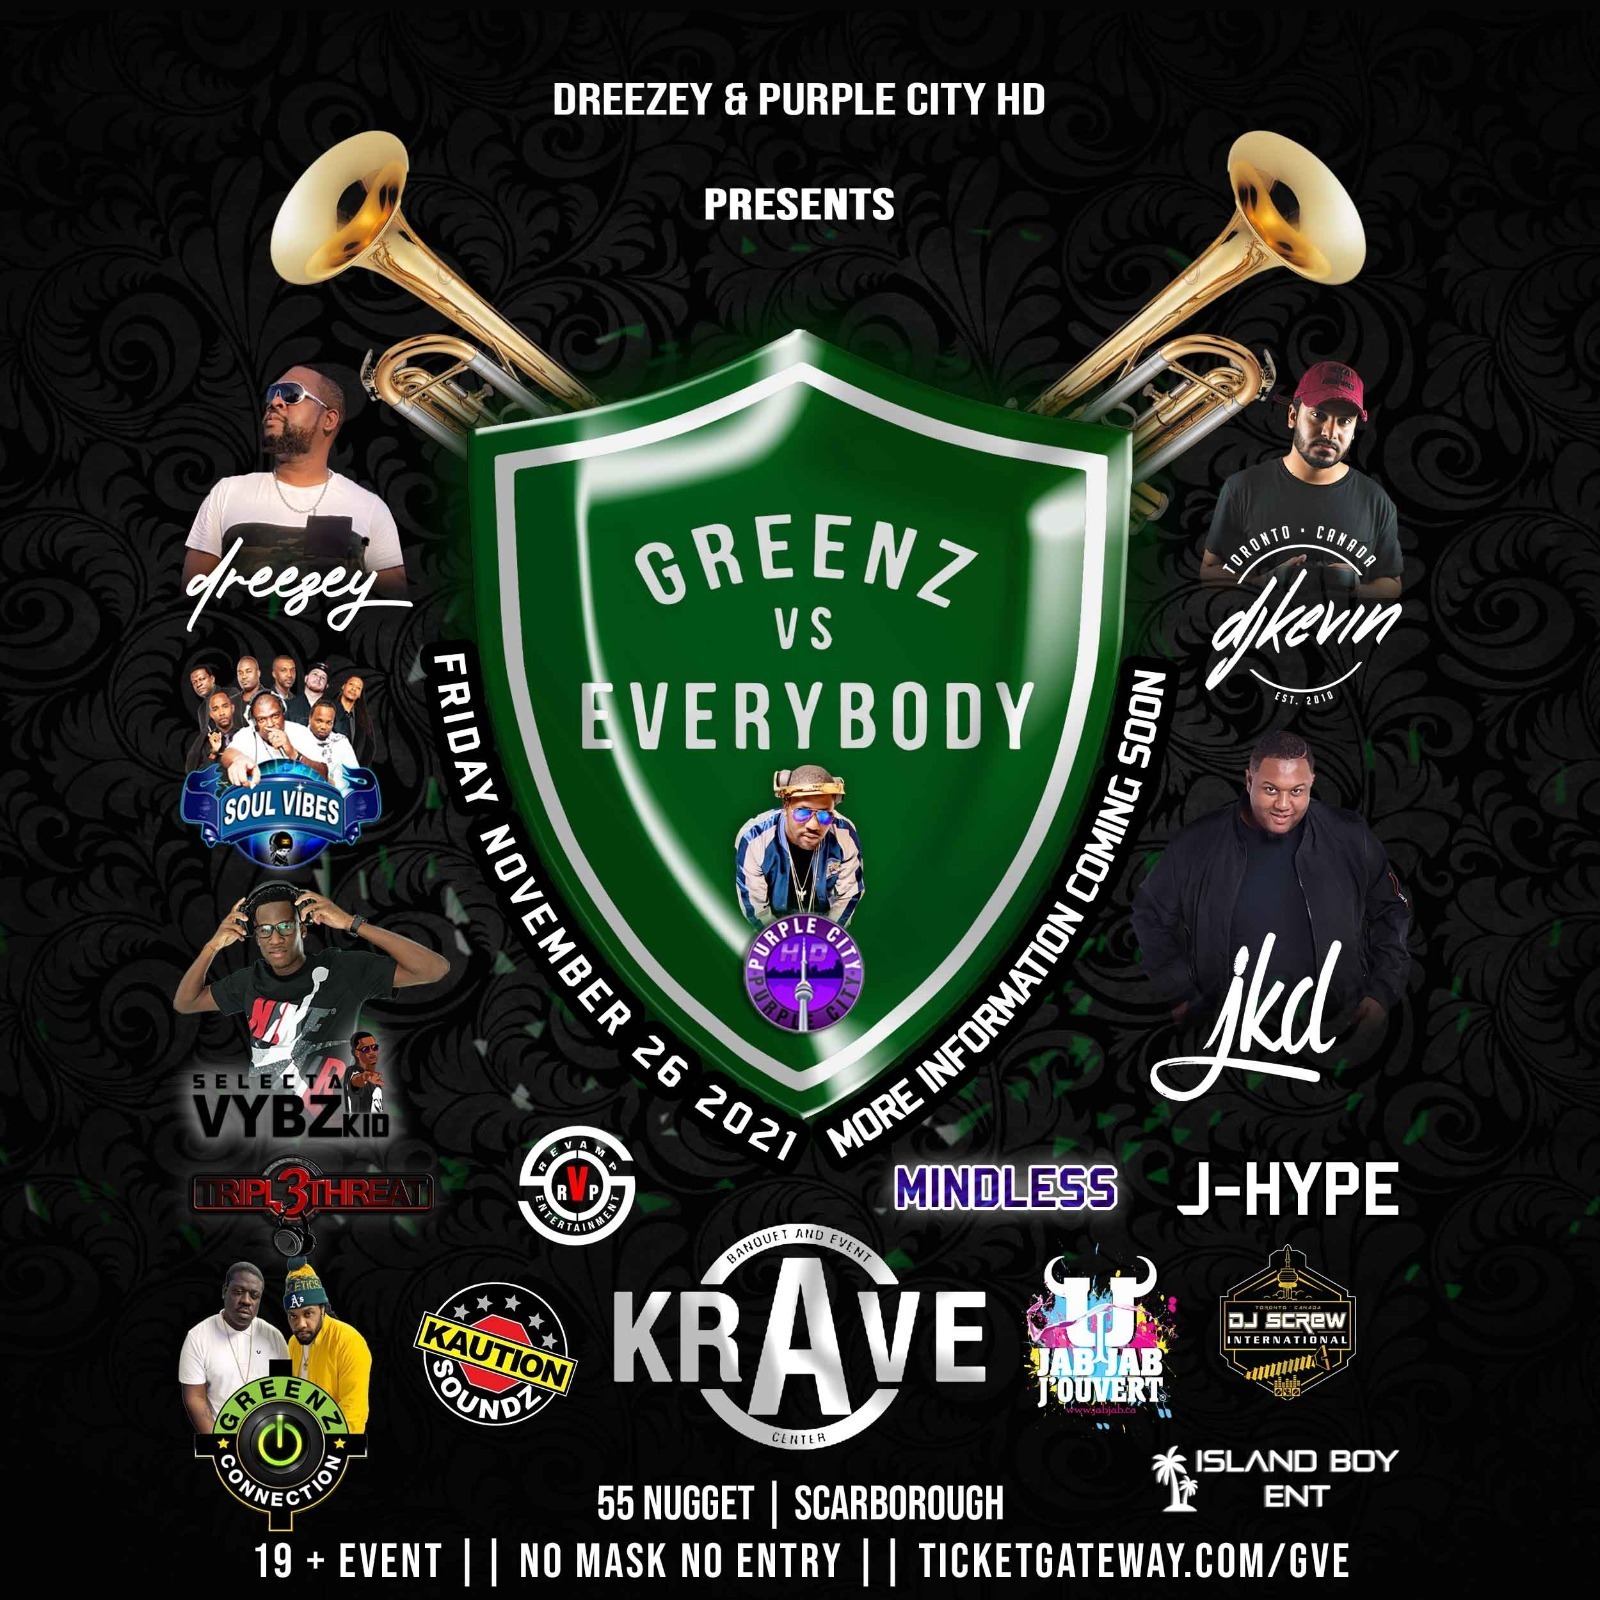 Greenz Vs Everybody - Presented by Dreezey & Purple City